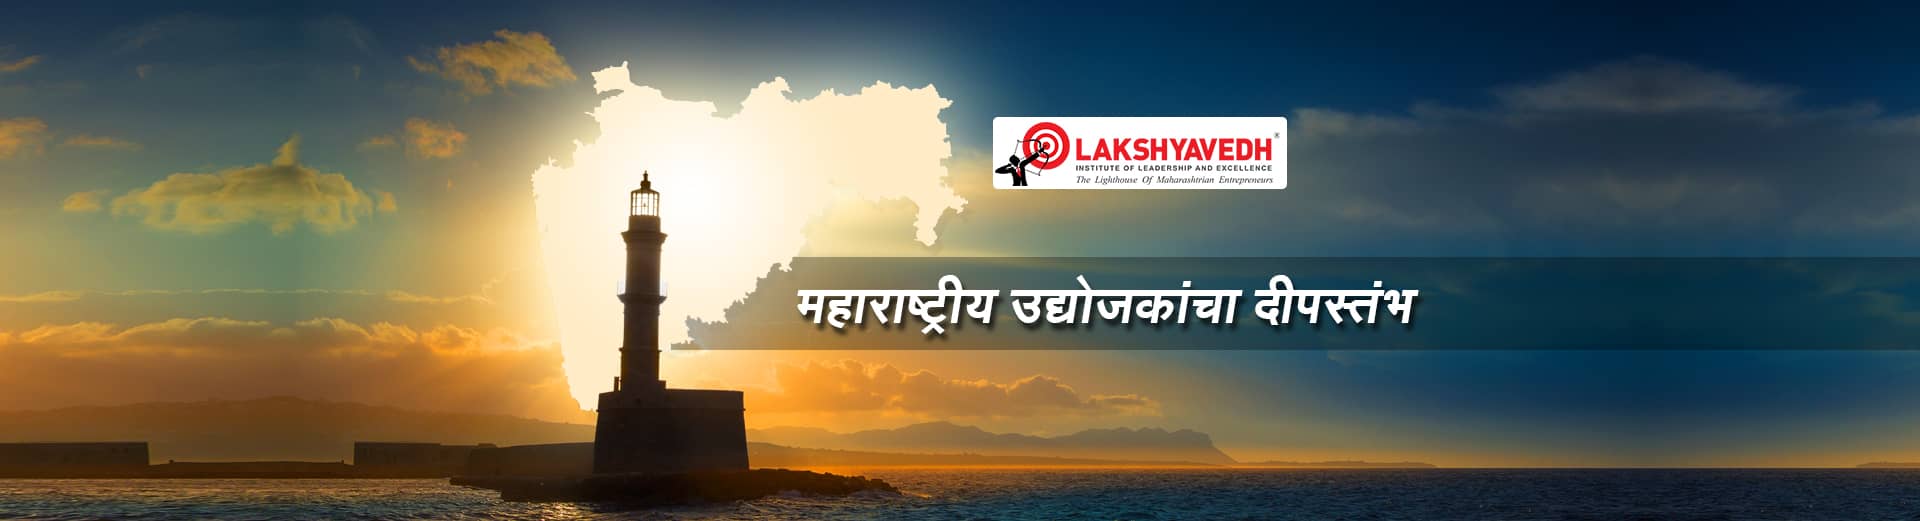 Lakshyavedh Best Online Business Course in Marathi